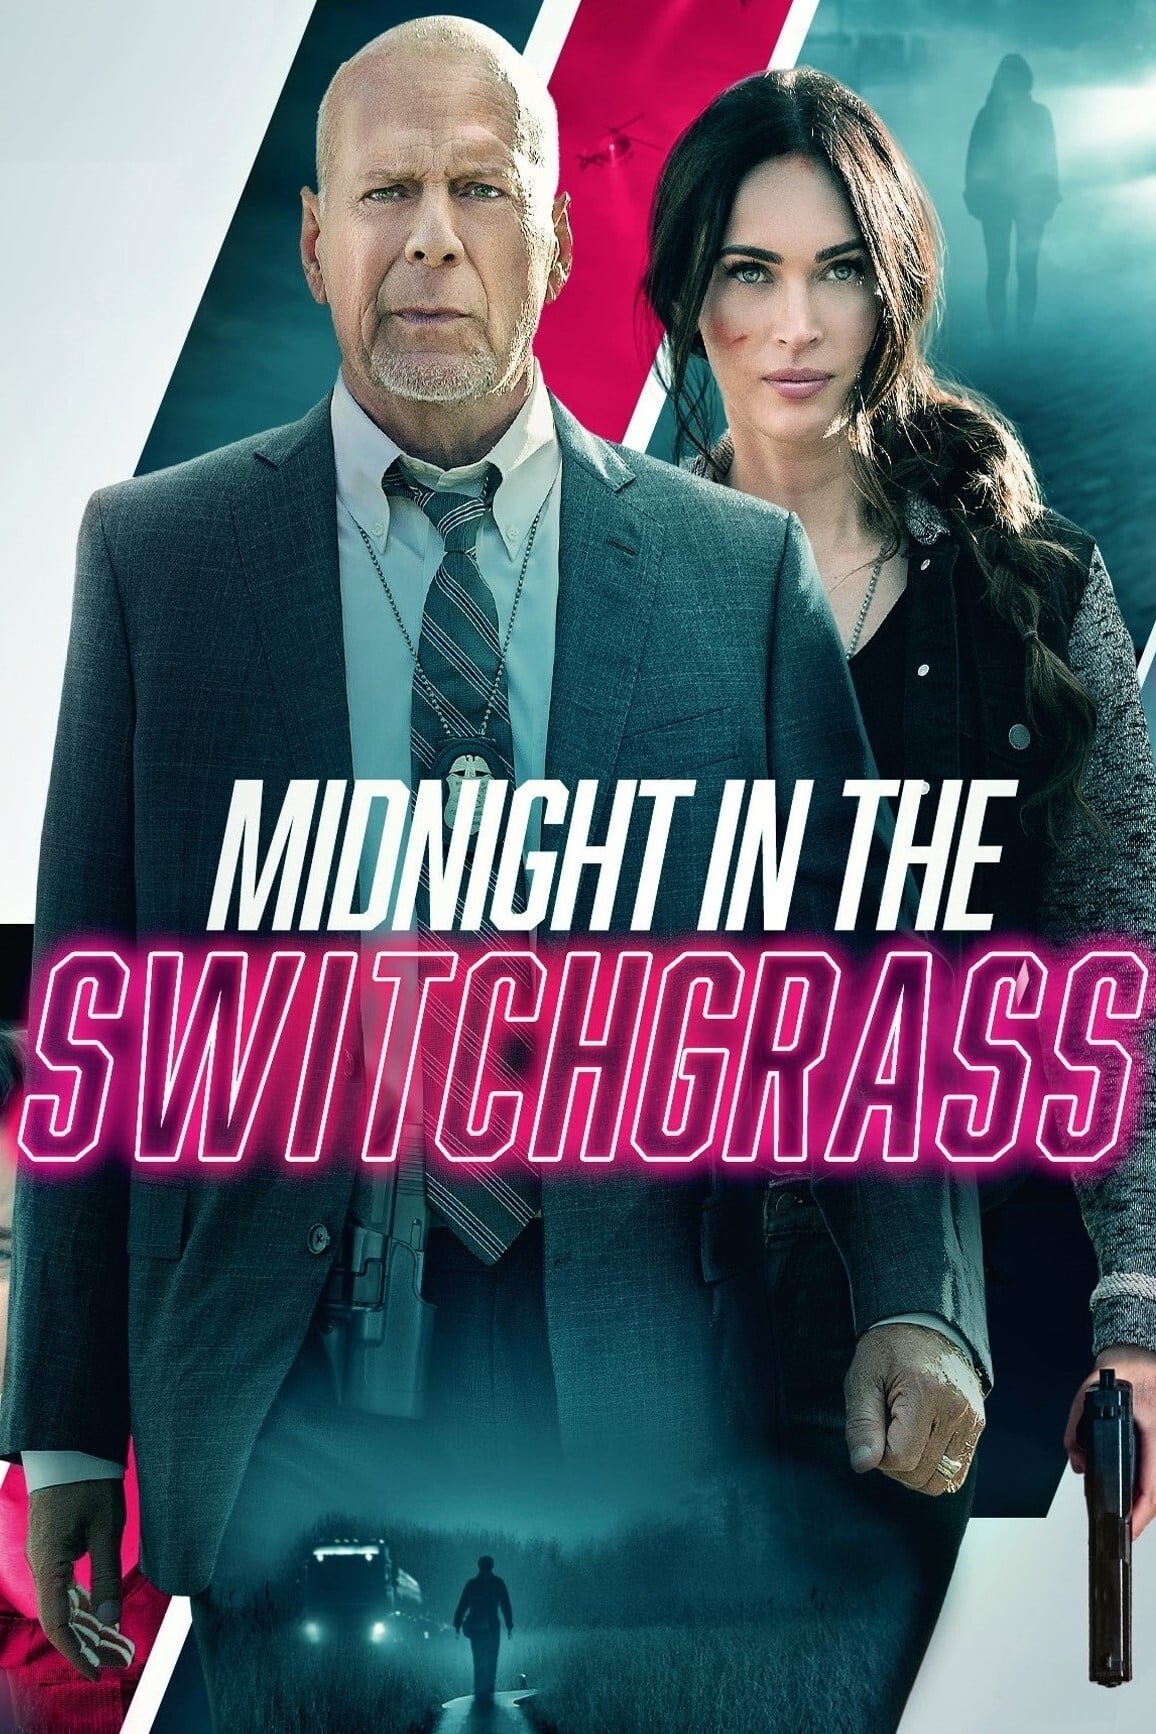 Nửa Đêm Ở Switchgrass (Midnight in the Switchgrass) [2021]